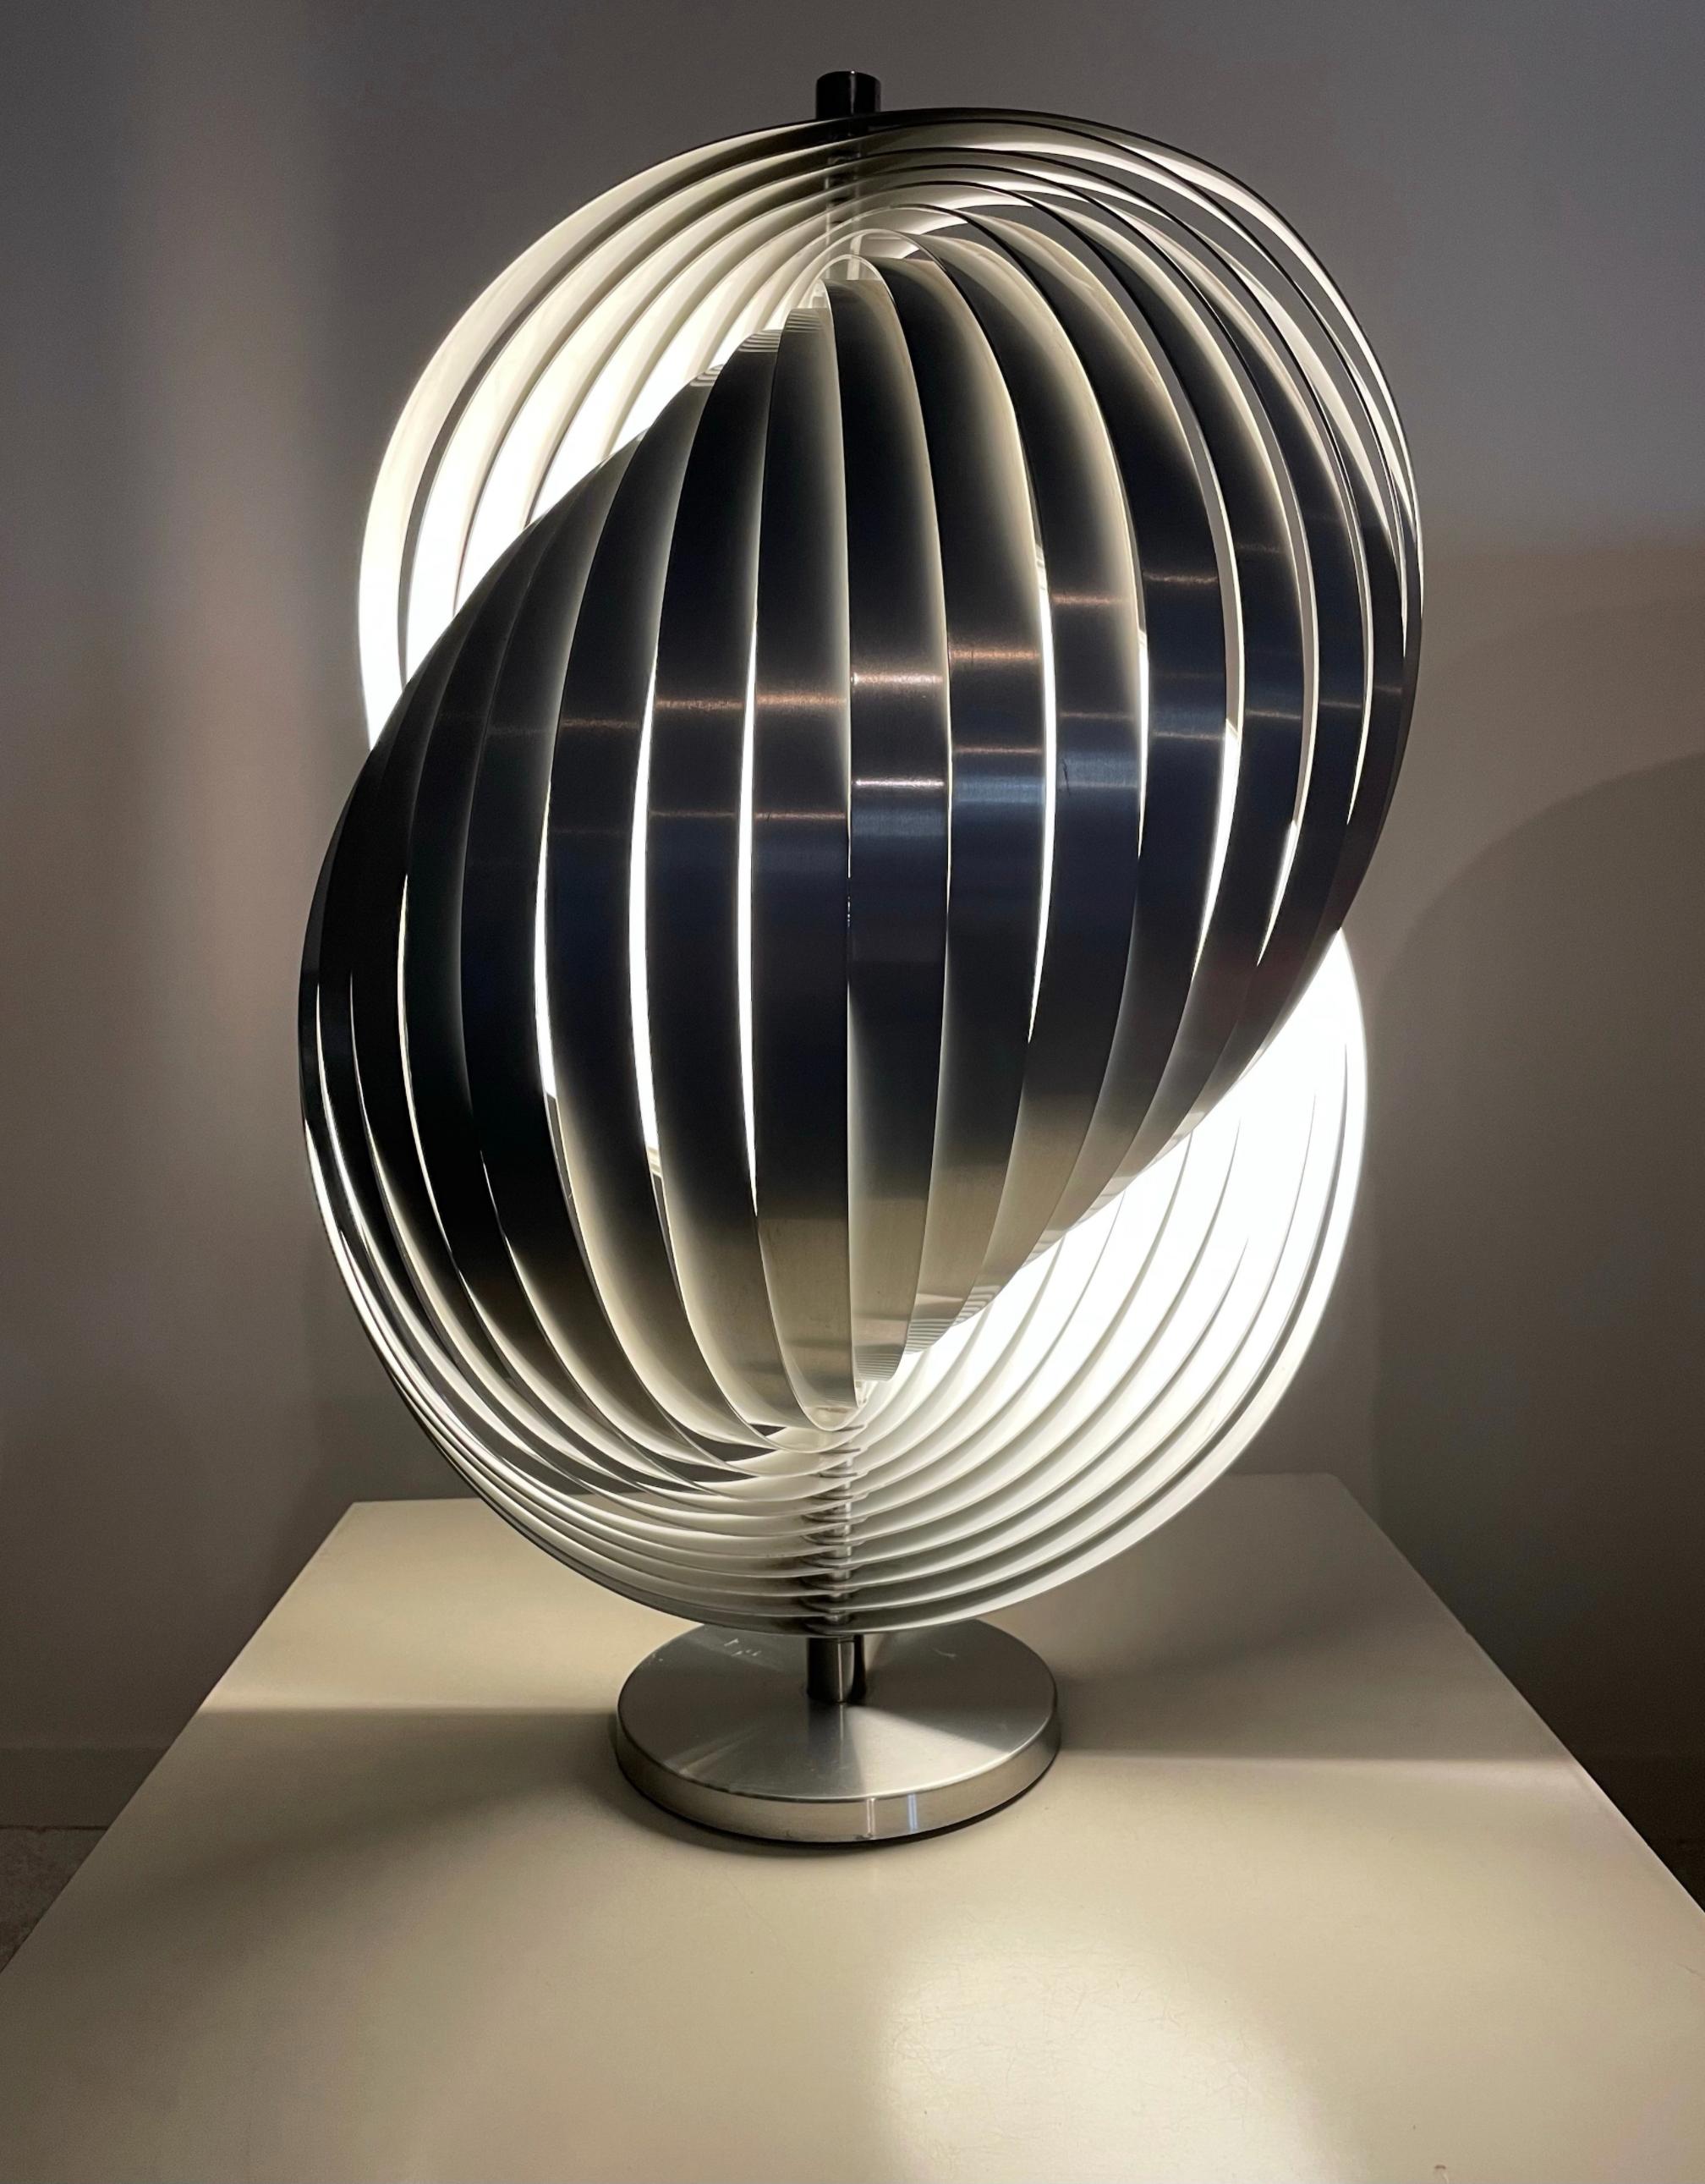 Spiral table lamp, model 